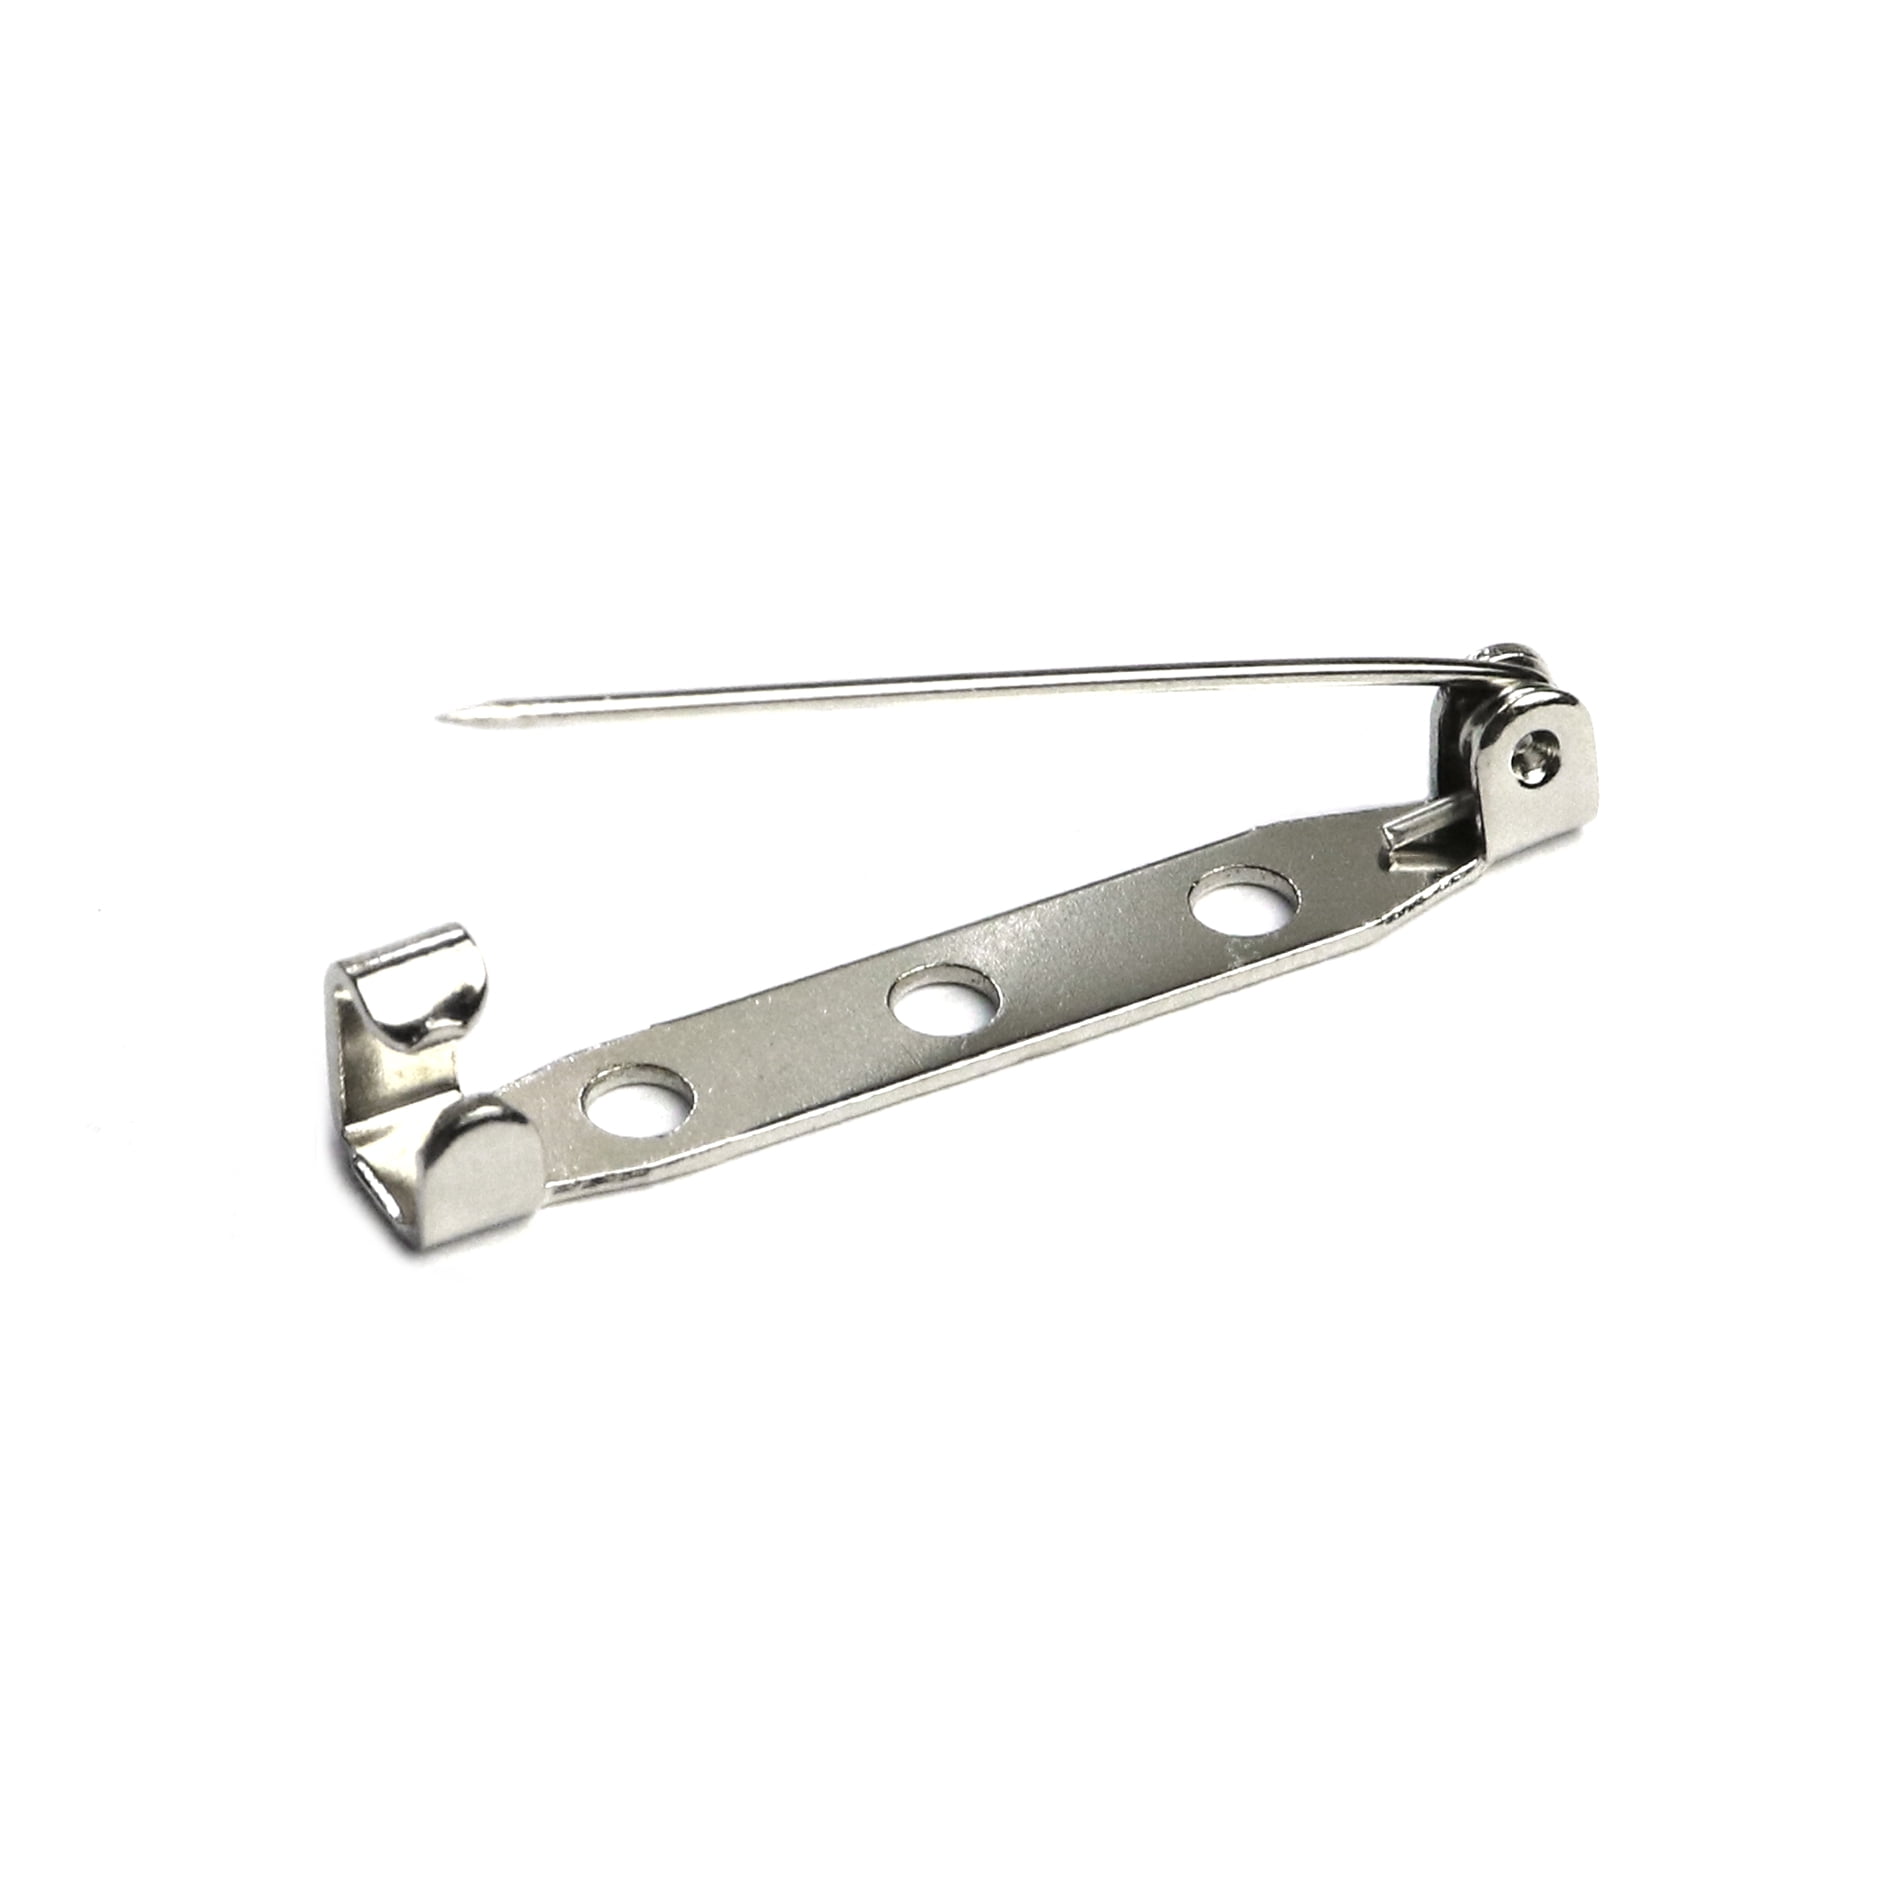 500 Pcs Silver Tone Brooch Pin Backs Clasp 1.5 inch (38mm) Bar Pins  Findings 3 Holes Safety Pins for Badge Insignia, Citation Bars, Making  Corsage